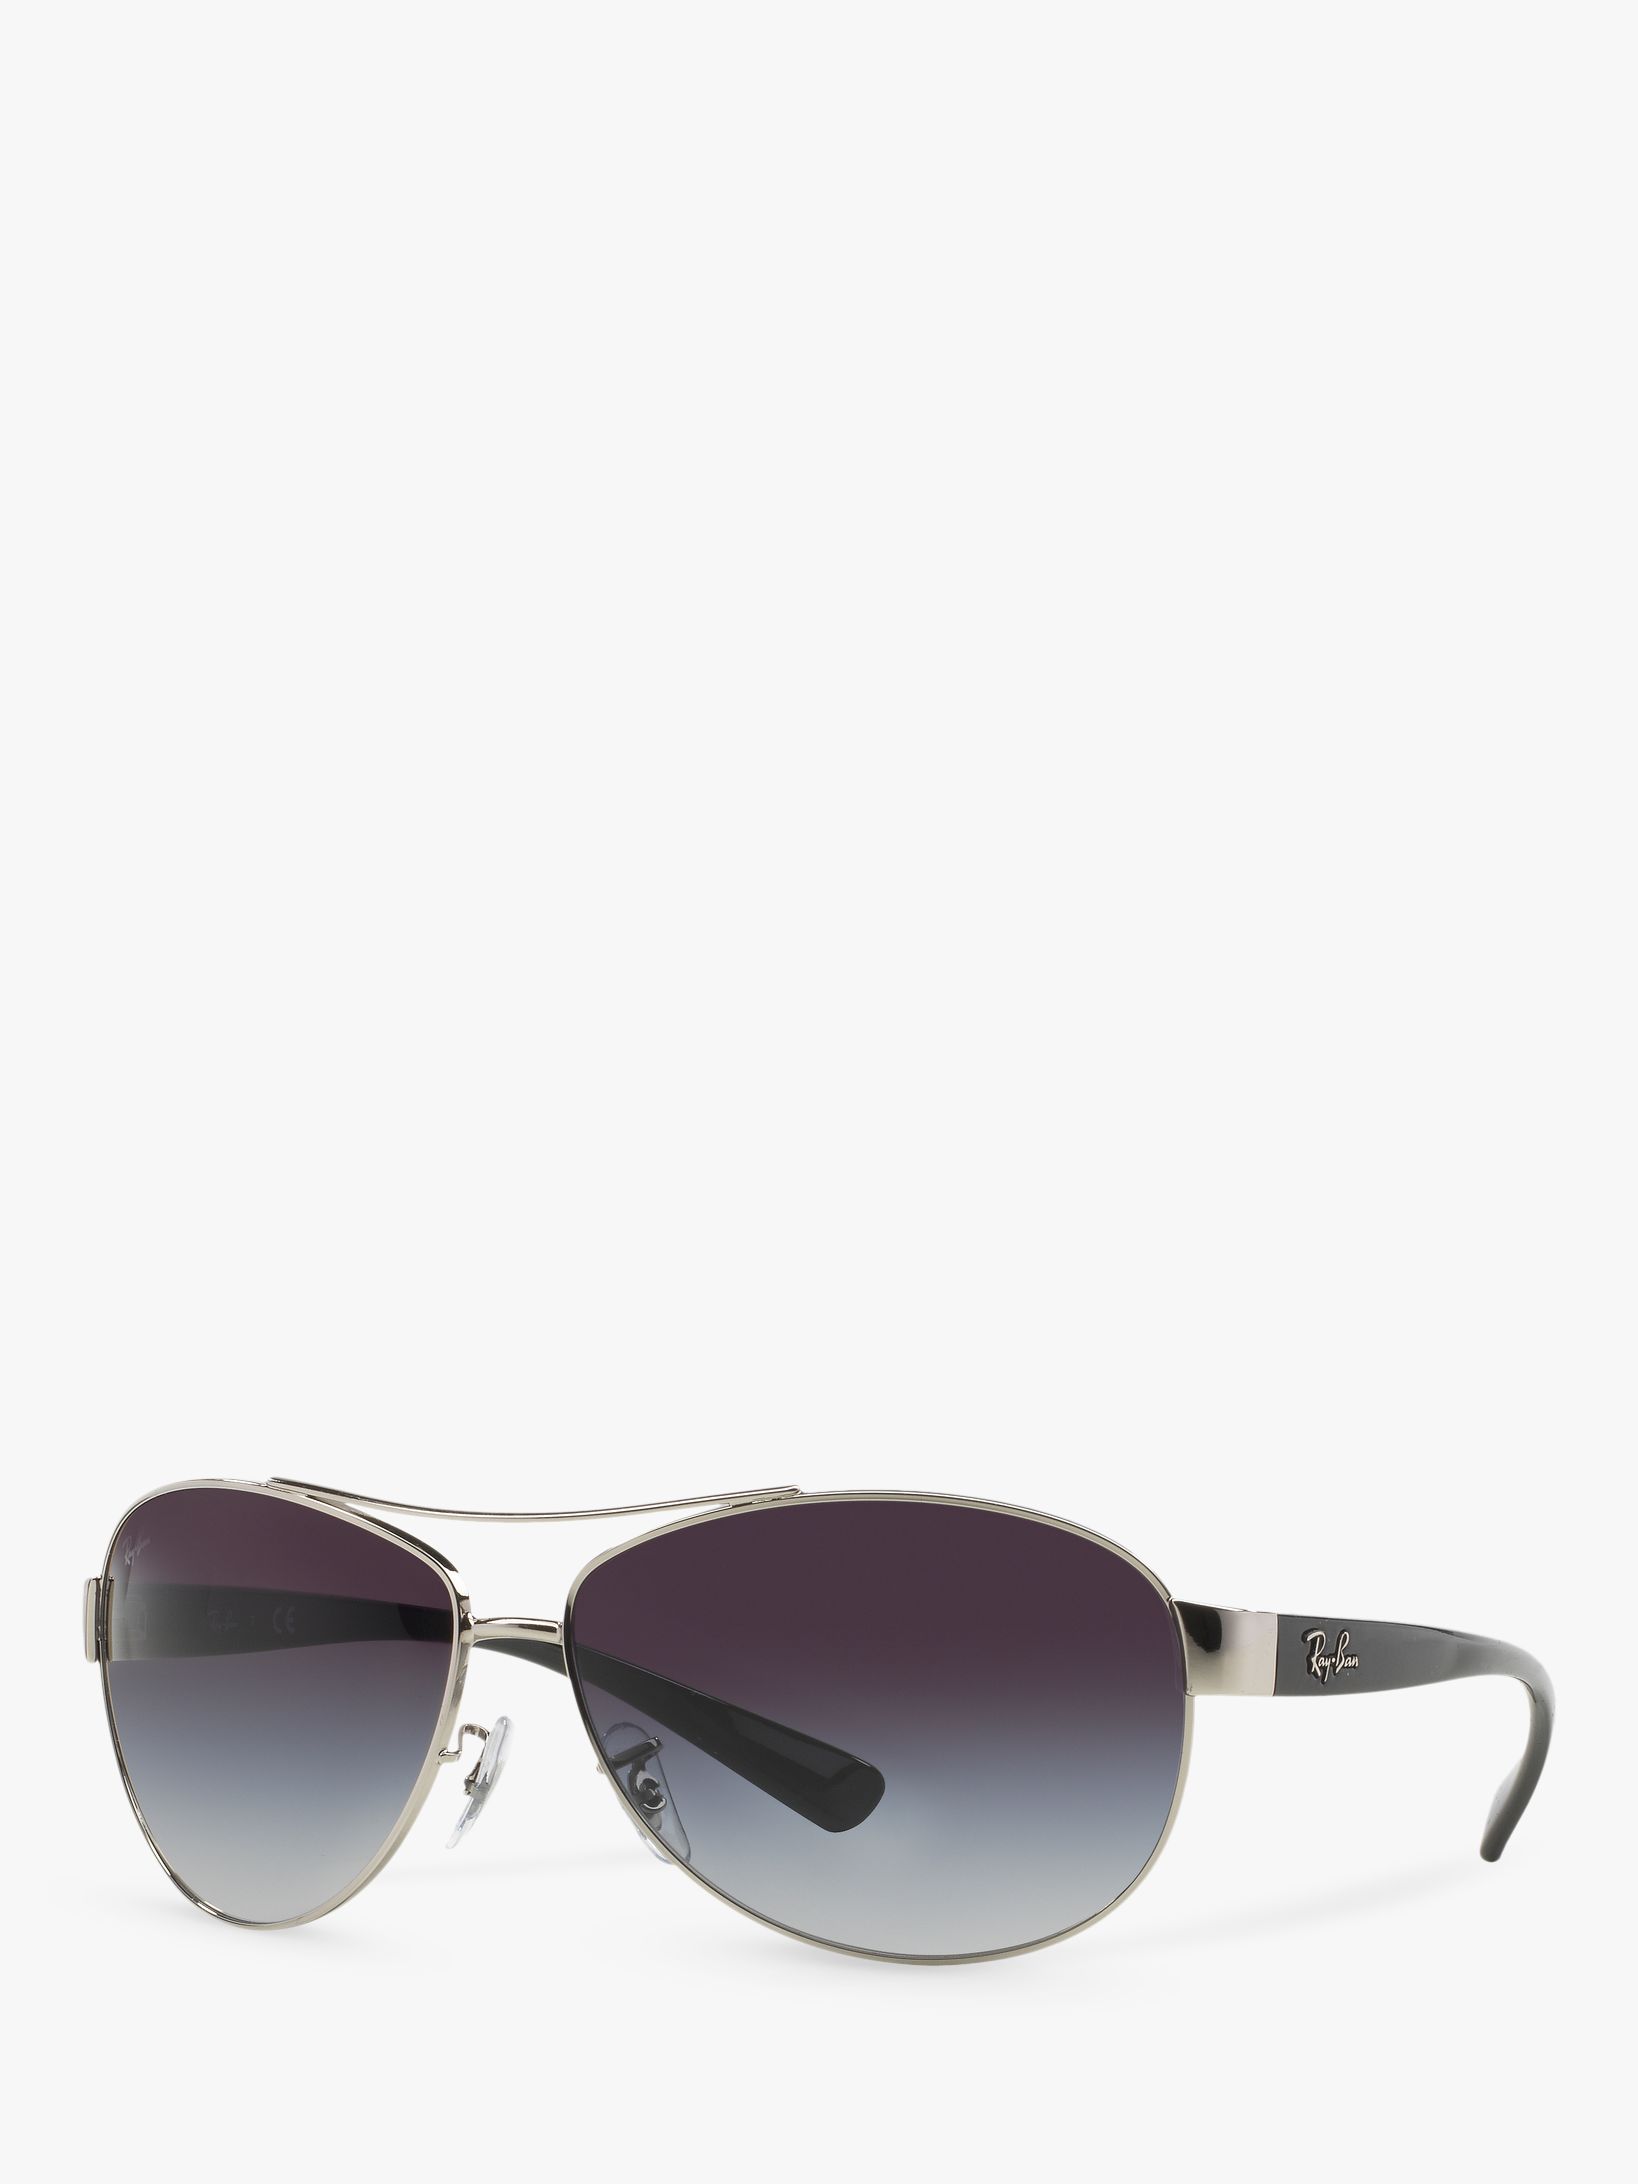 Ray-Ban RB3386 Men's Aviator Sunglasses, Silver/Grey Gradient